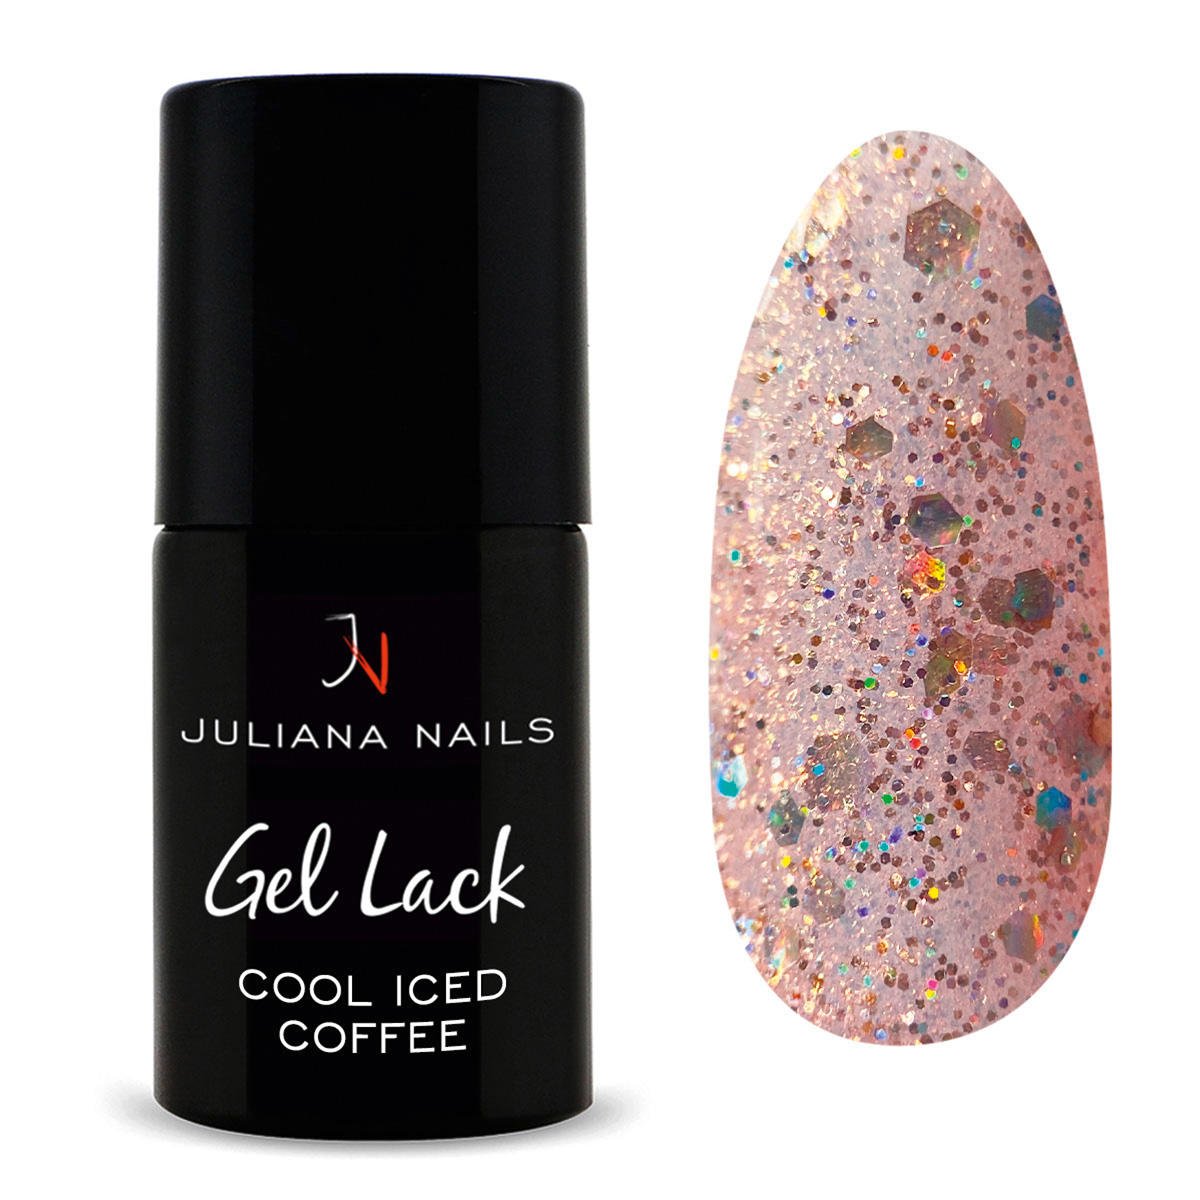 juliana nails gel lack glitter/shimmer cool iced coffee, flasche 6 ml caffè freddo ghiacciato